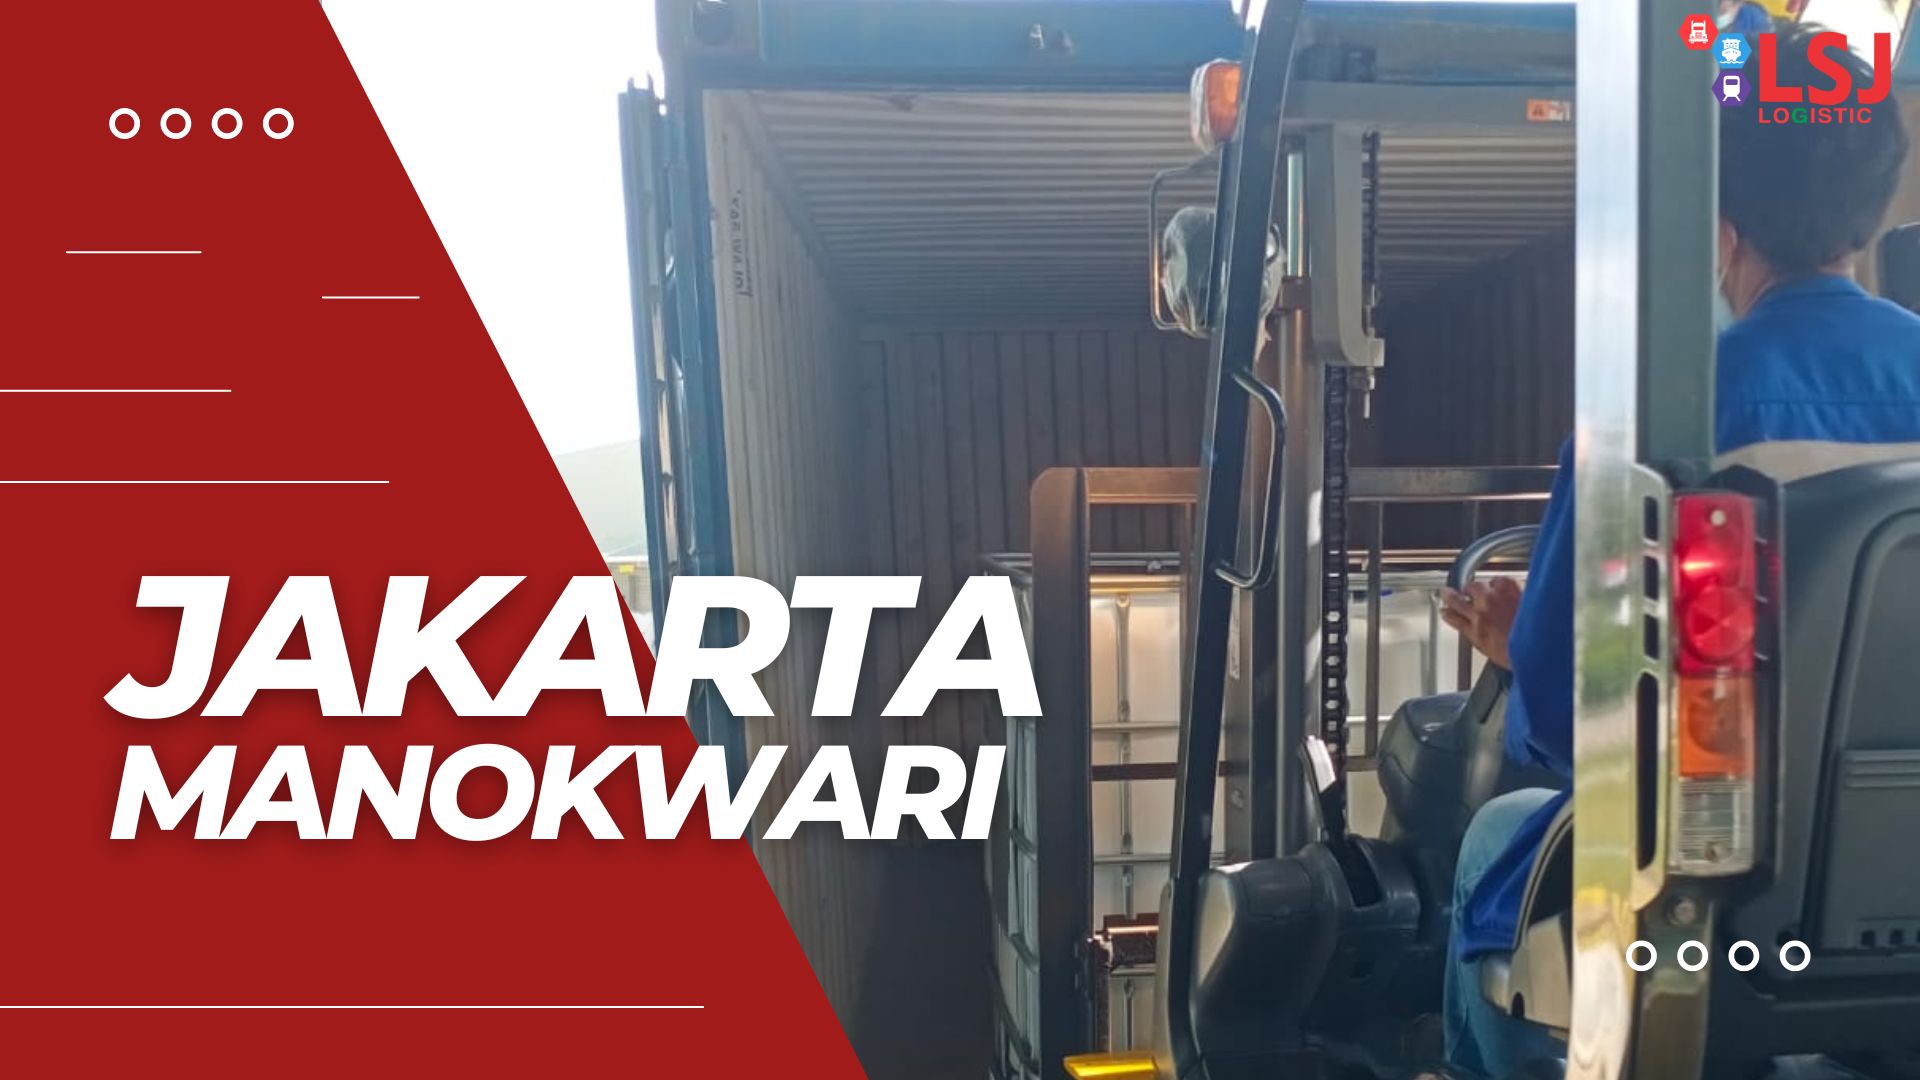 Tarif Pengiriman Container Jakarta Manokwari